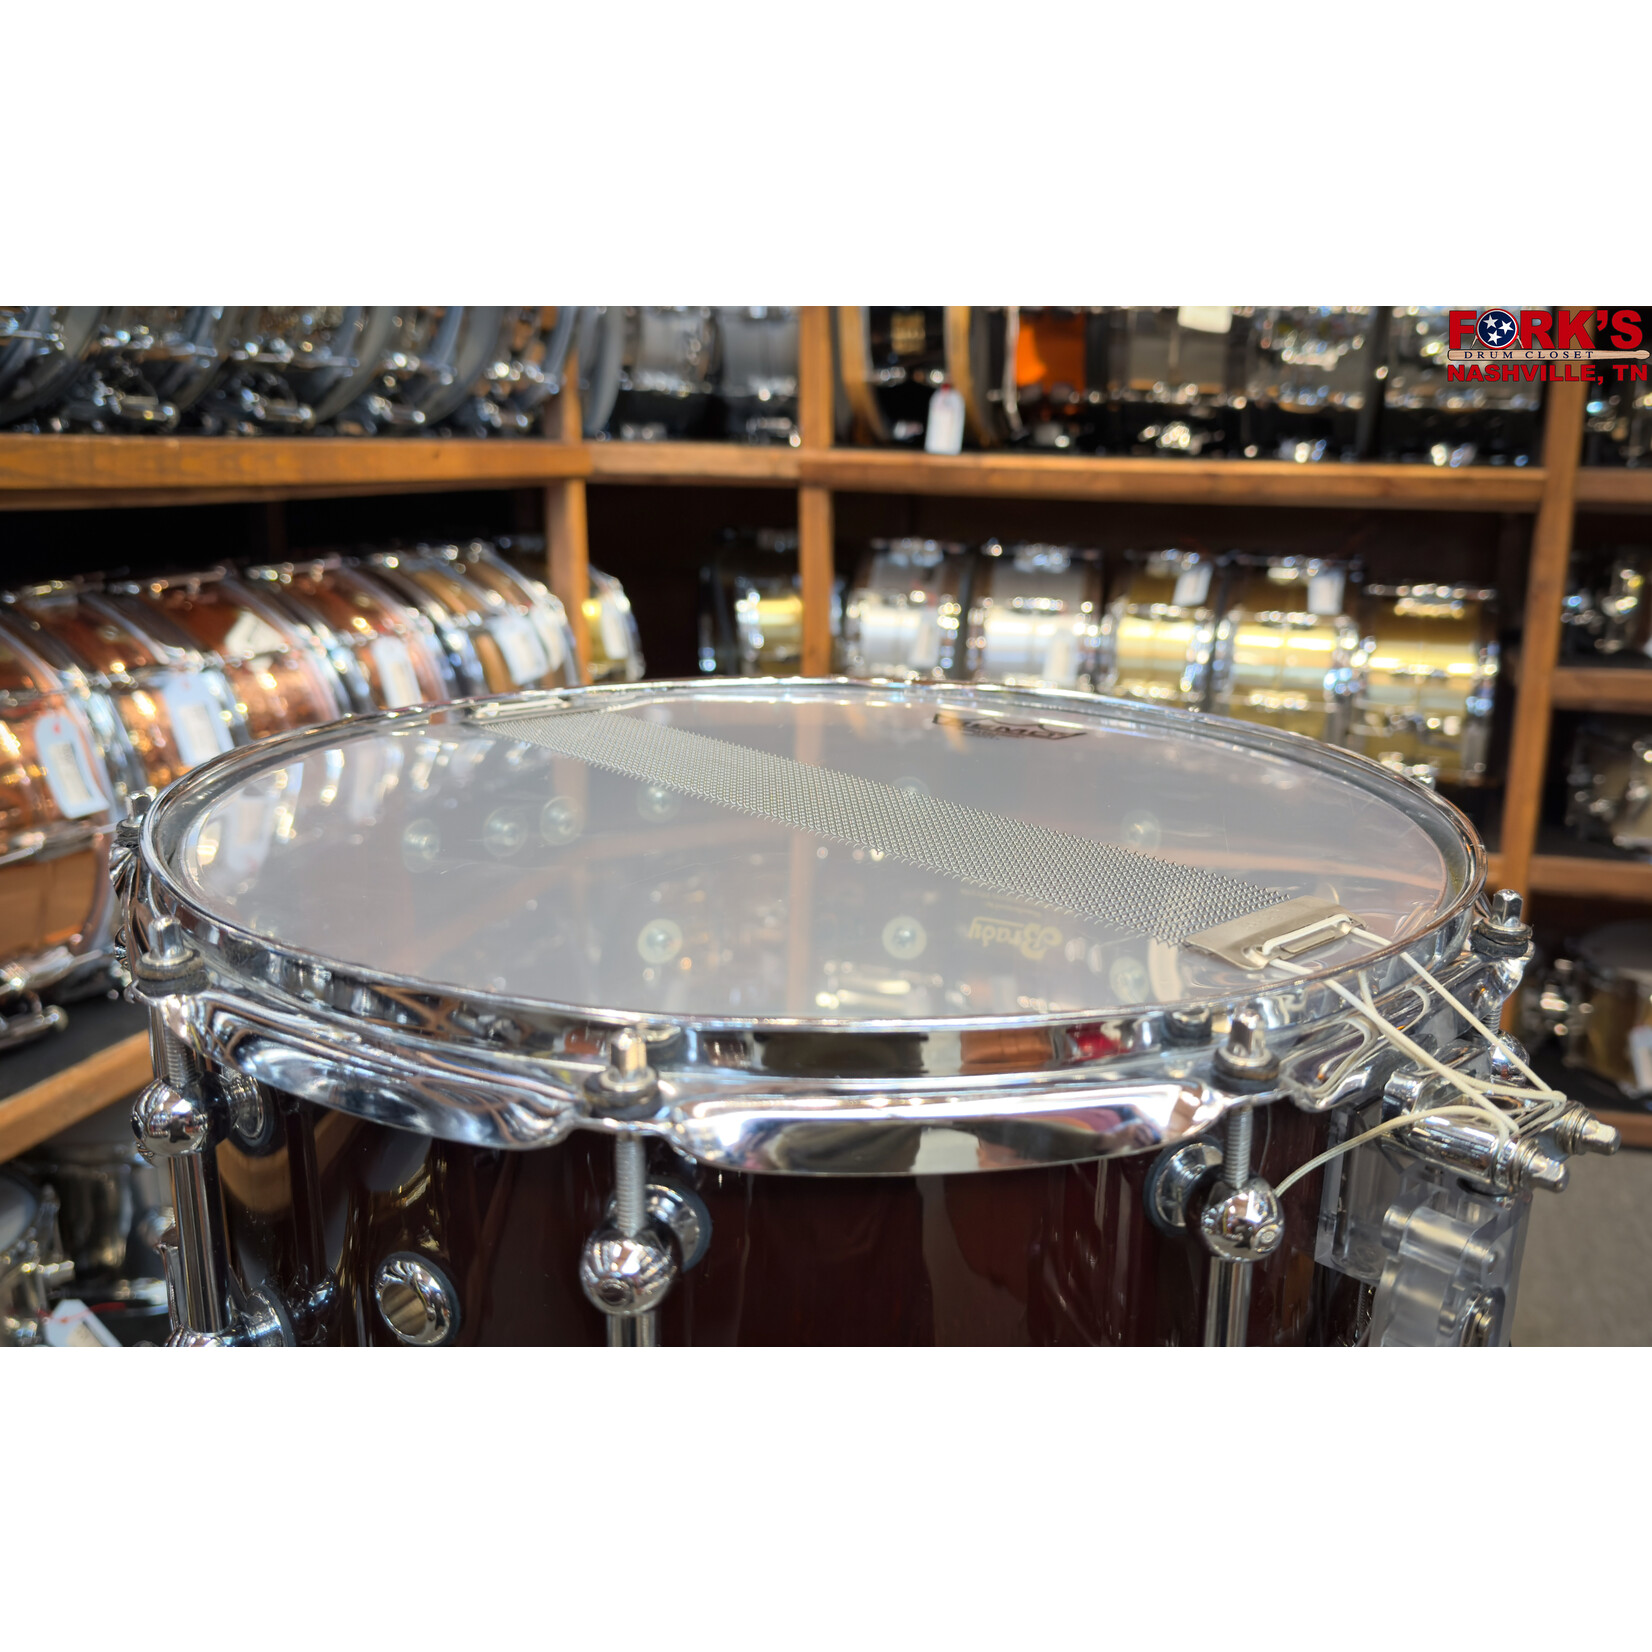 Brady Brady 5.5x14 Jarrah Block Snare Drum - "Gloss Lacquer"